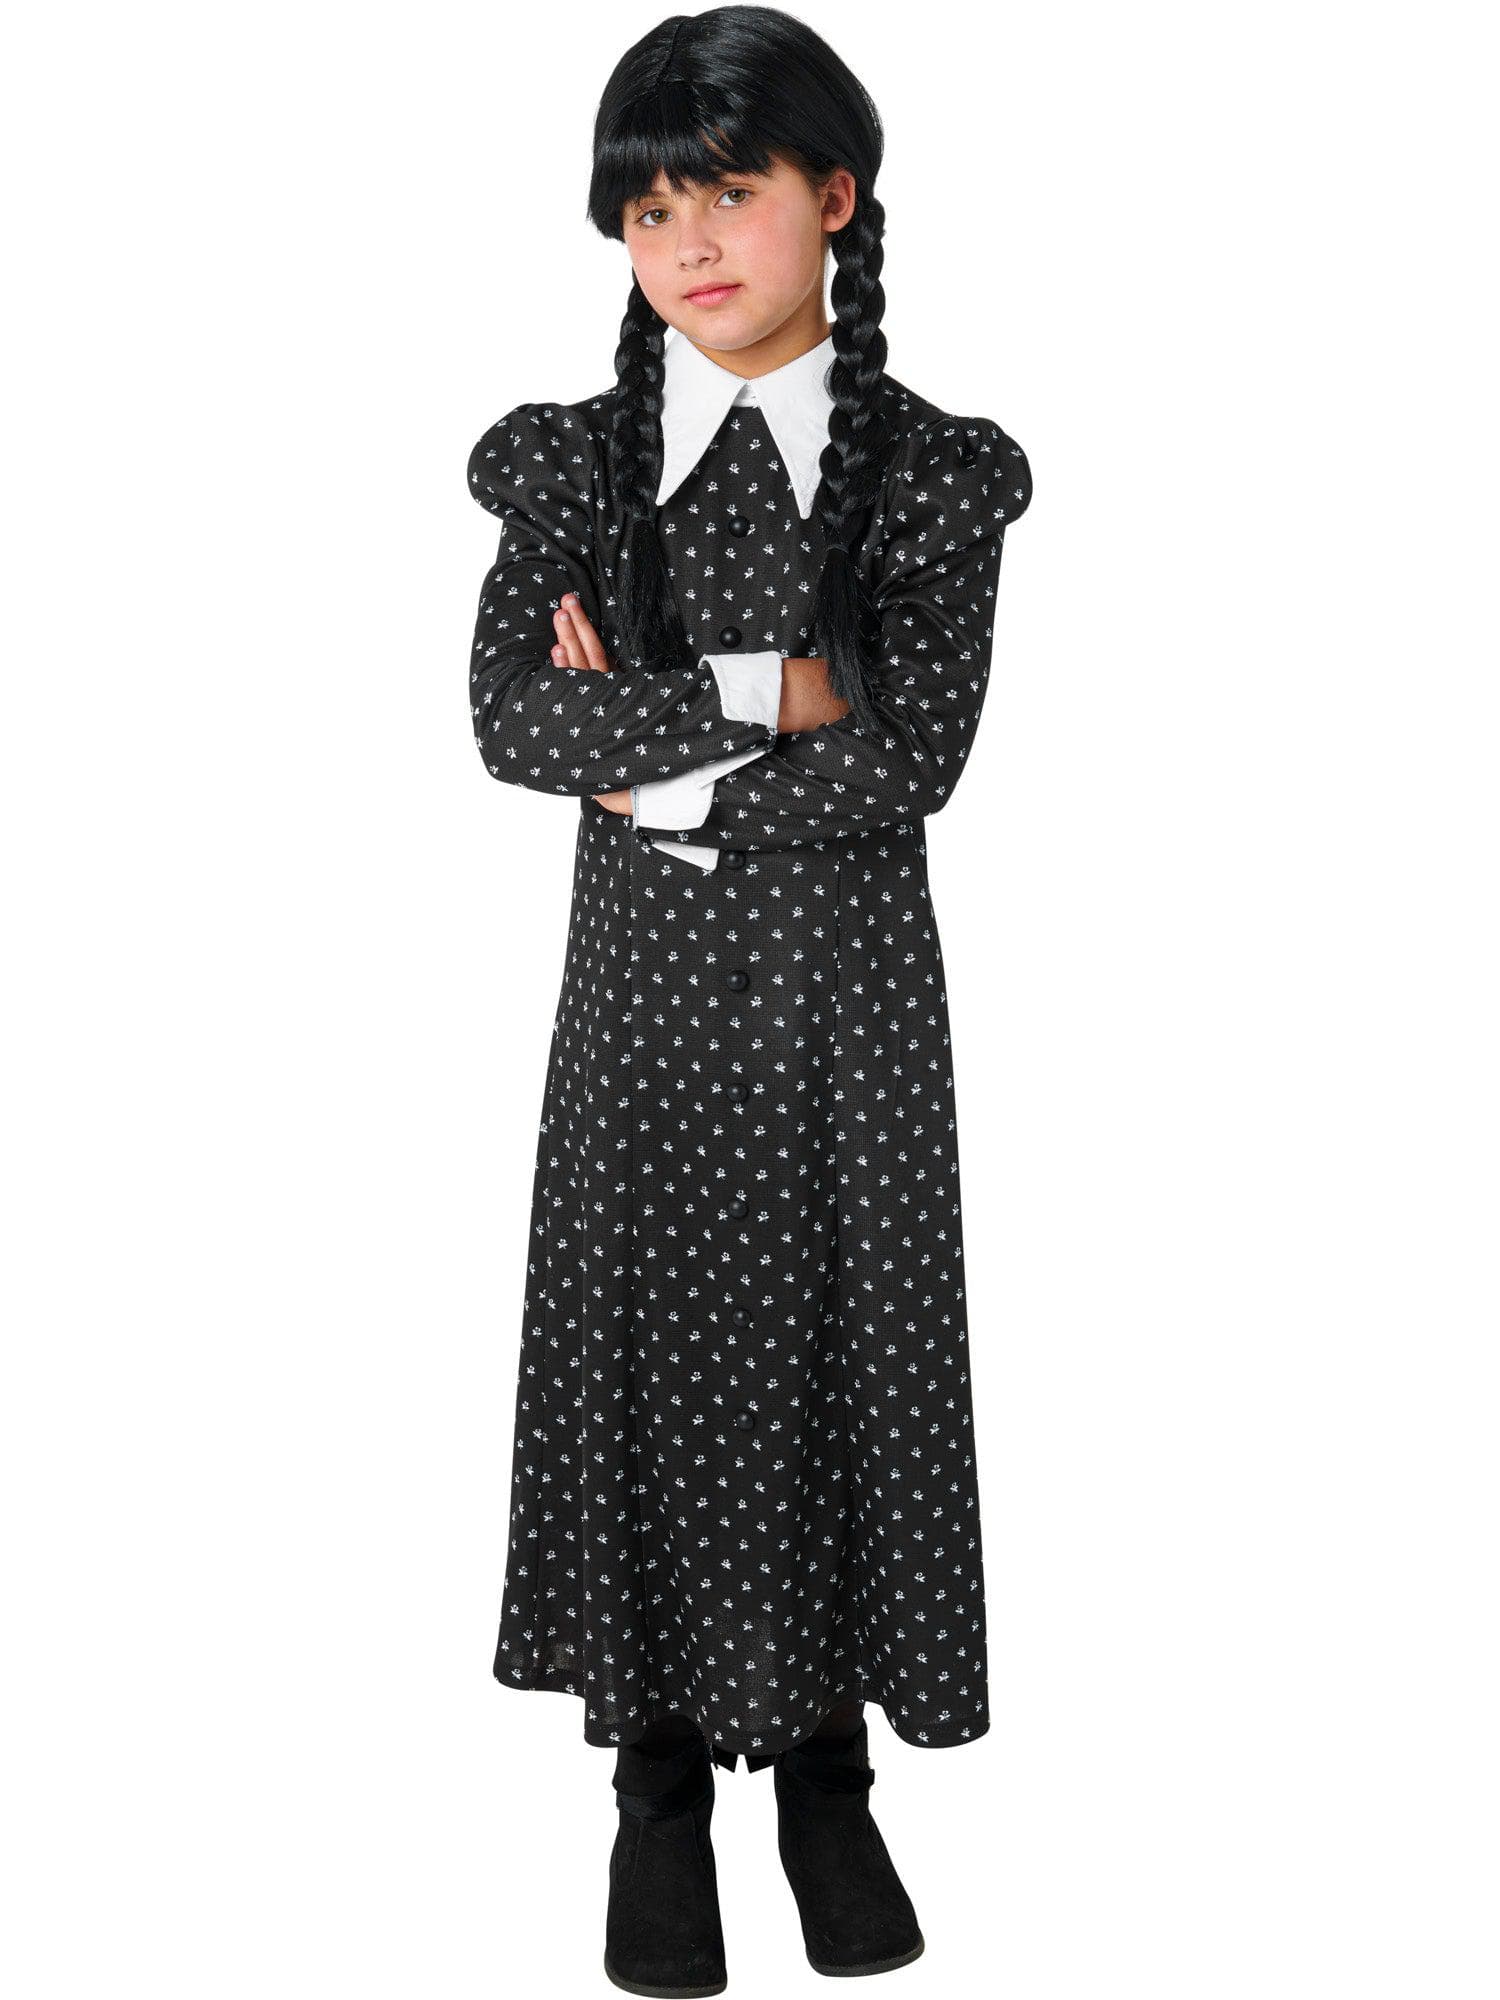 Wednesday Addams Girl's Costume - costumes.com